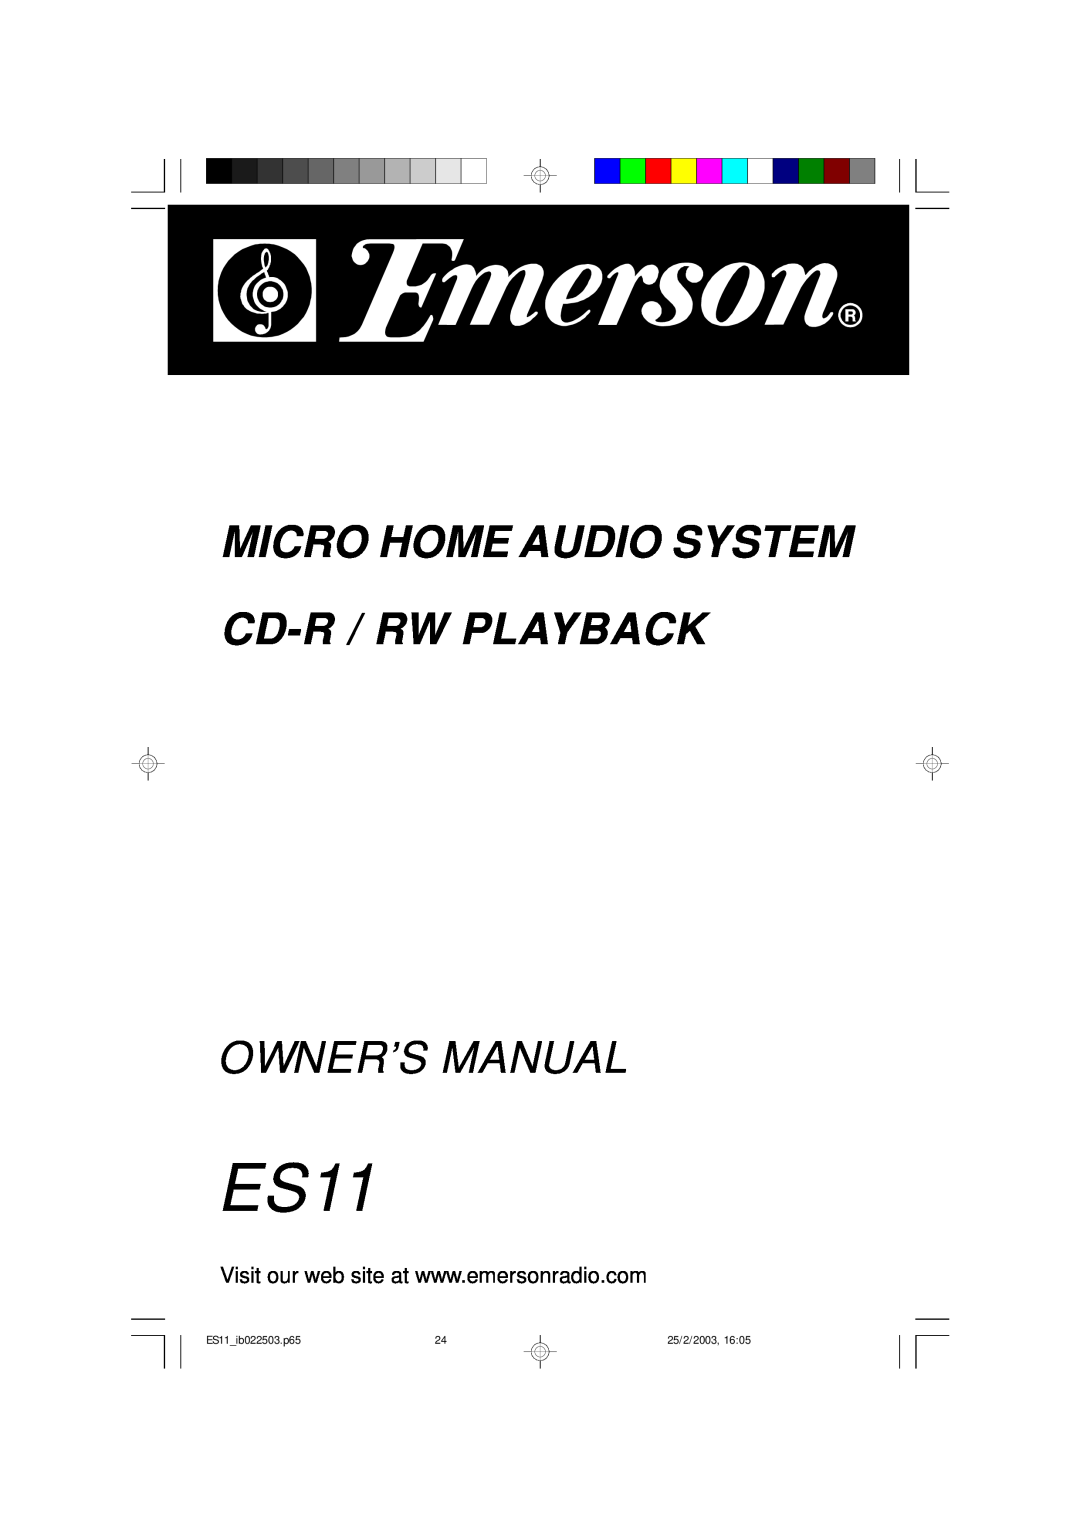 Emerson owner manual Micro Home Audio System Cd-R /Rw Playback, ES11 ib022503.p65, 25/2/2003 